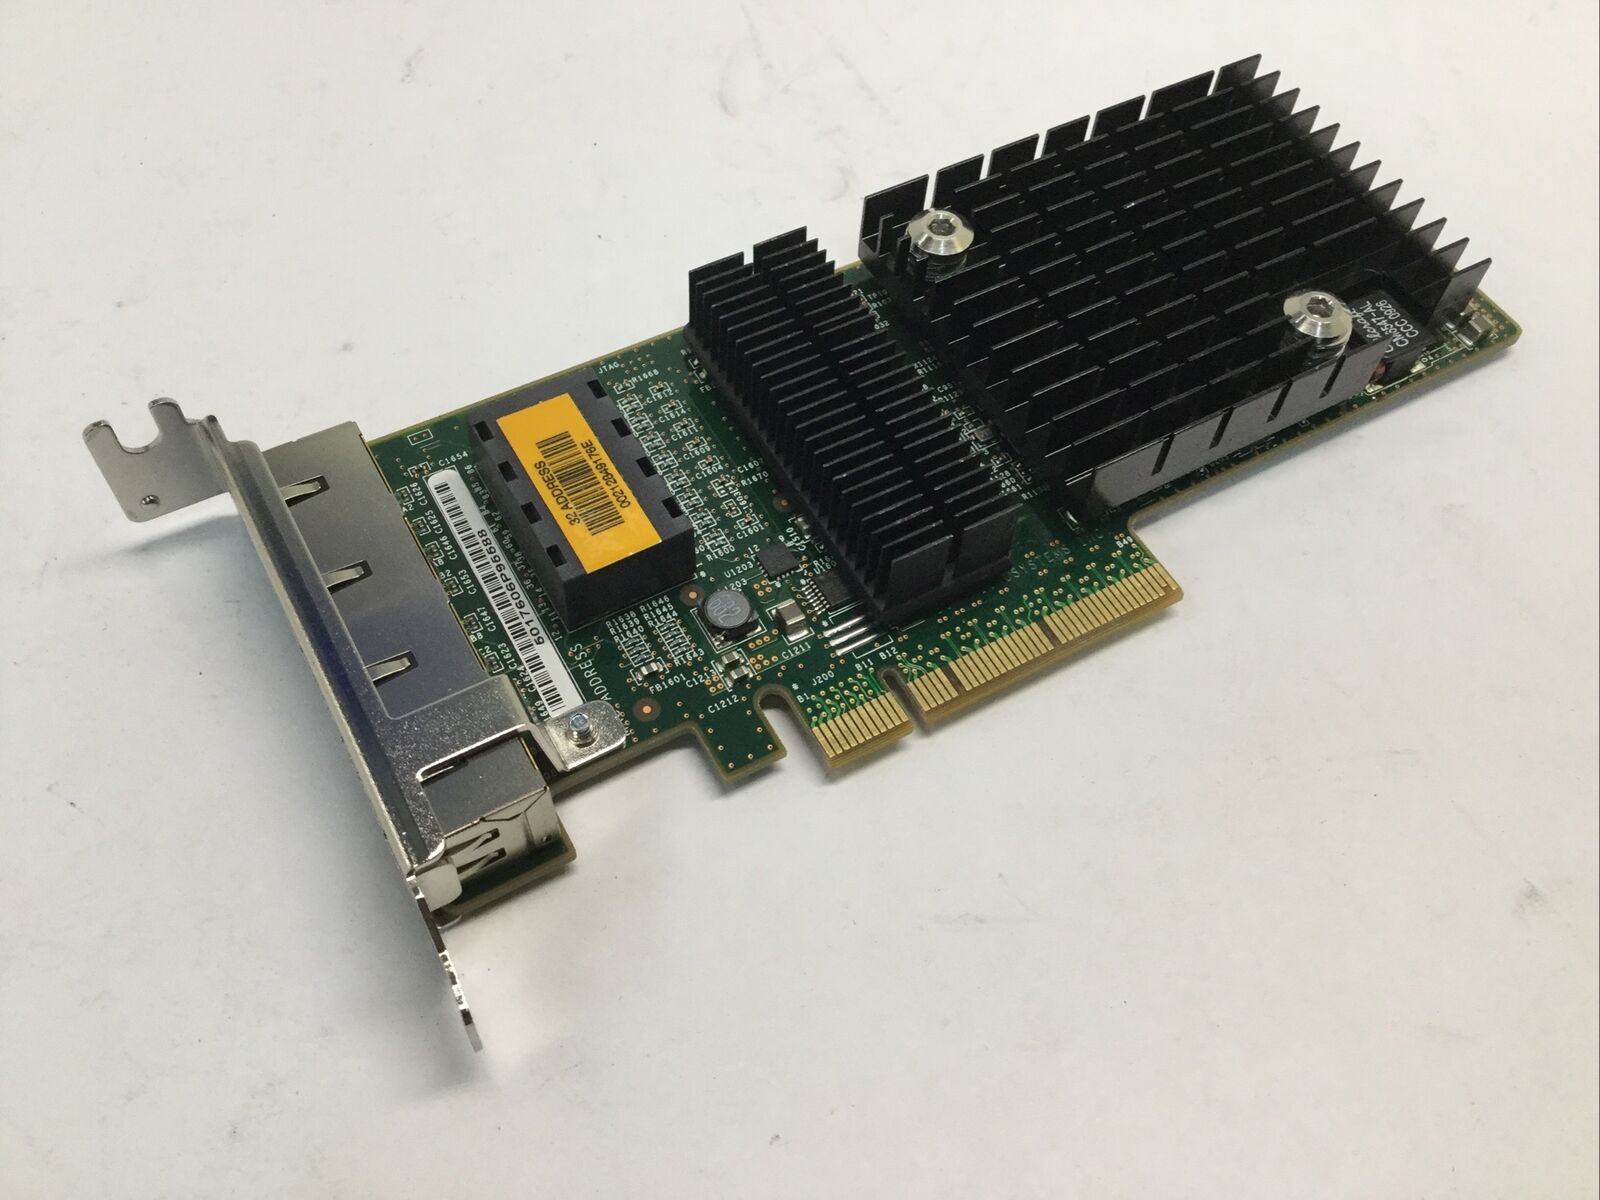 Sun 4-Port 1gb Gigabit RJ-45 Network PCIe Adapter 511-1422-01 ATLS1QGE 7055021